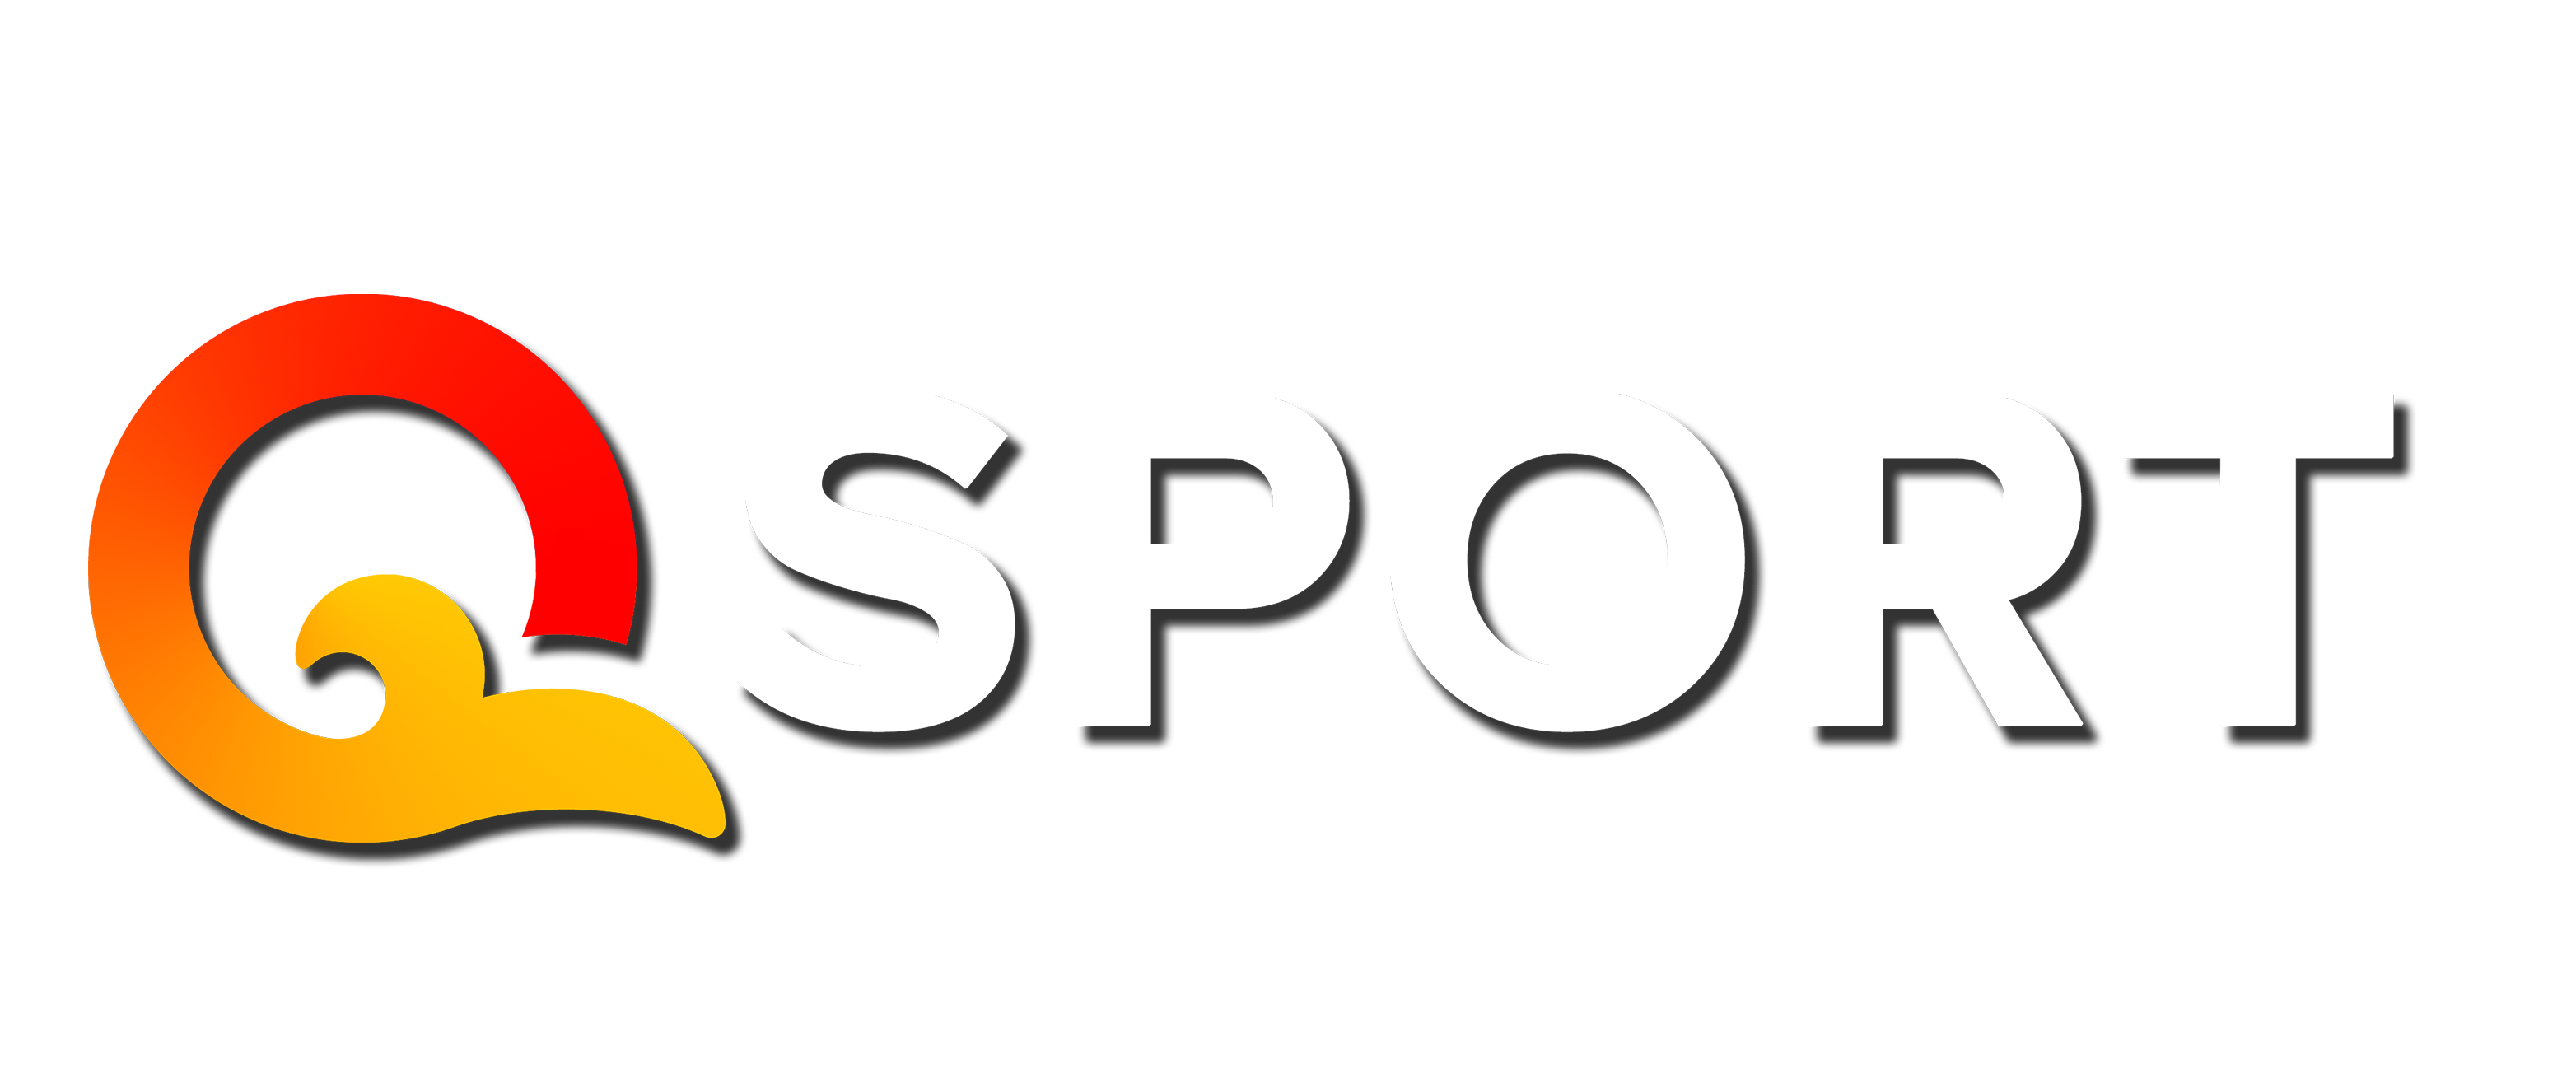 Qsport логотип. Qsport канал. Qsport Arena логотип. Иконка для канала Qsport. Qsport